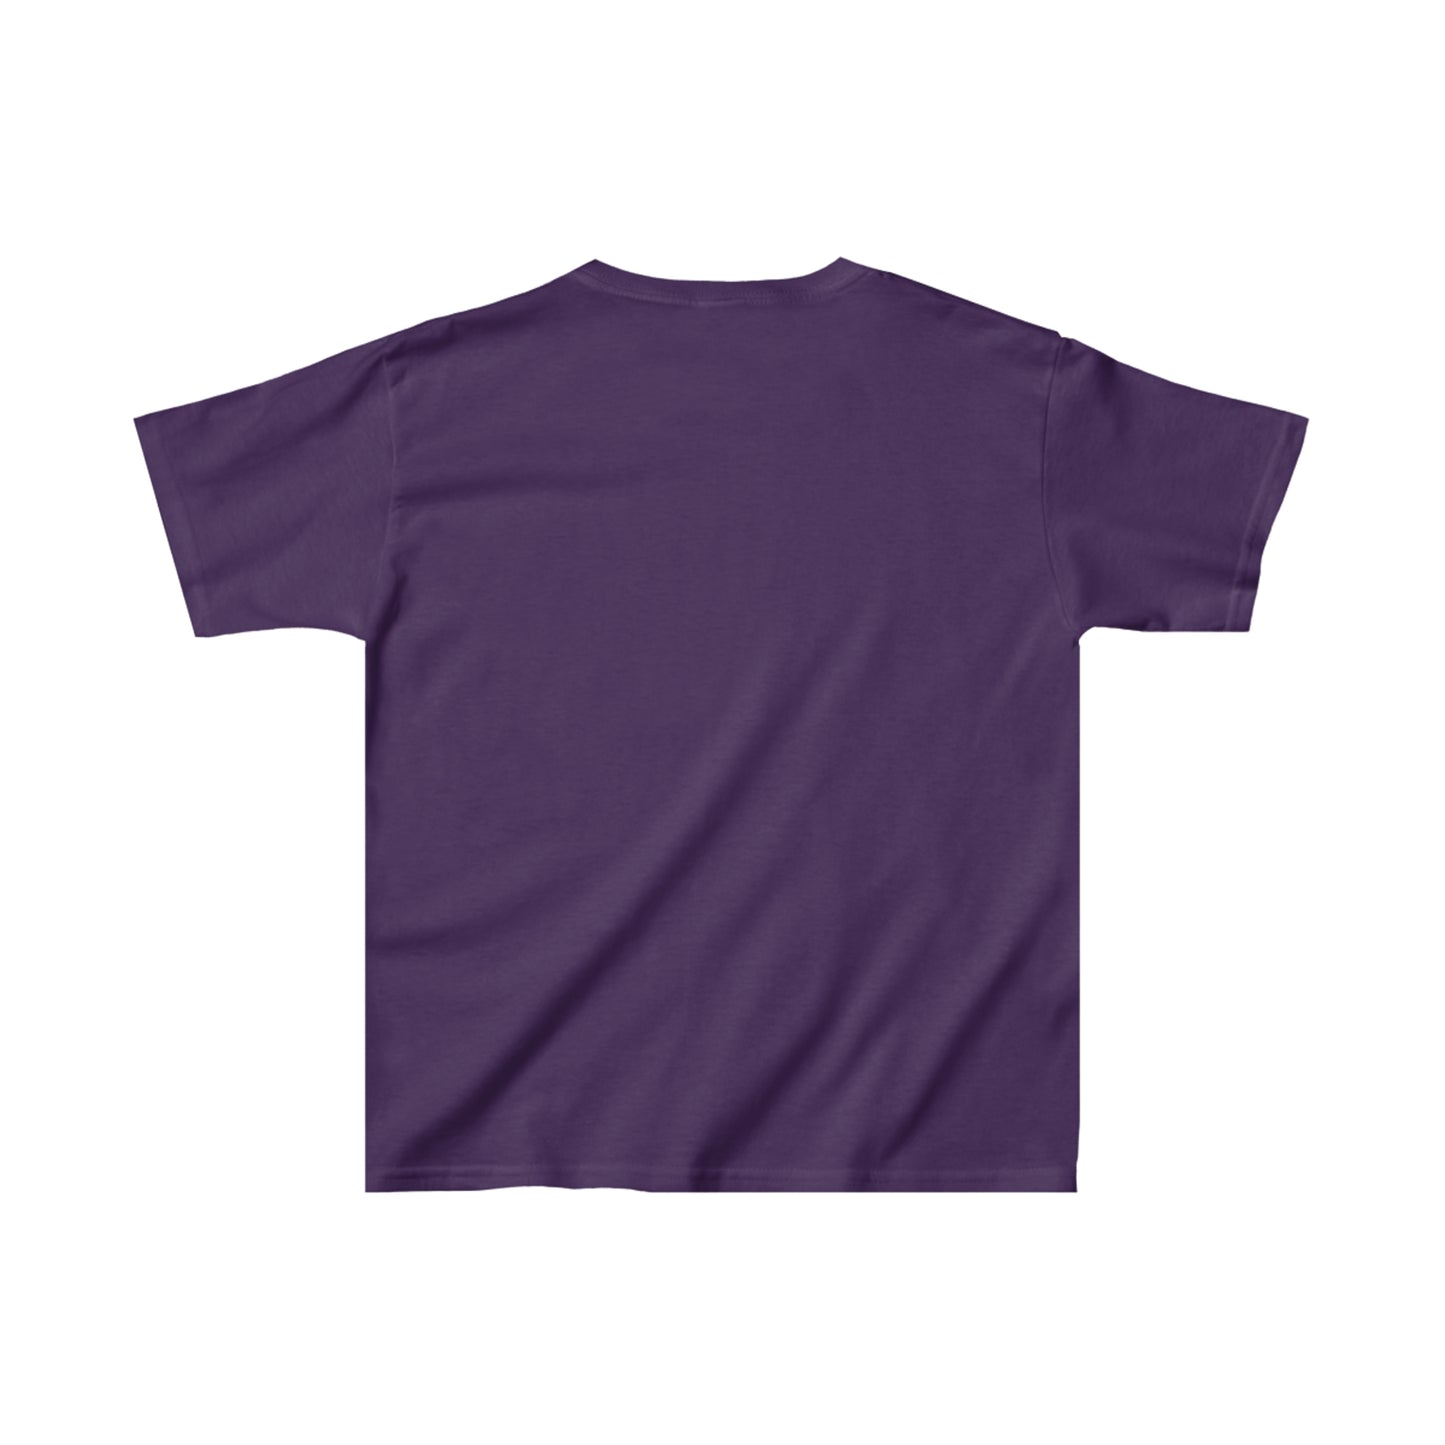 Dachshund Shirt for Kids - Dachshund Gift